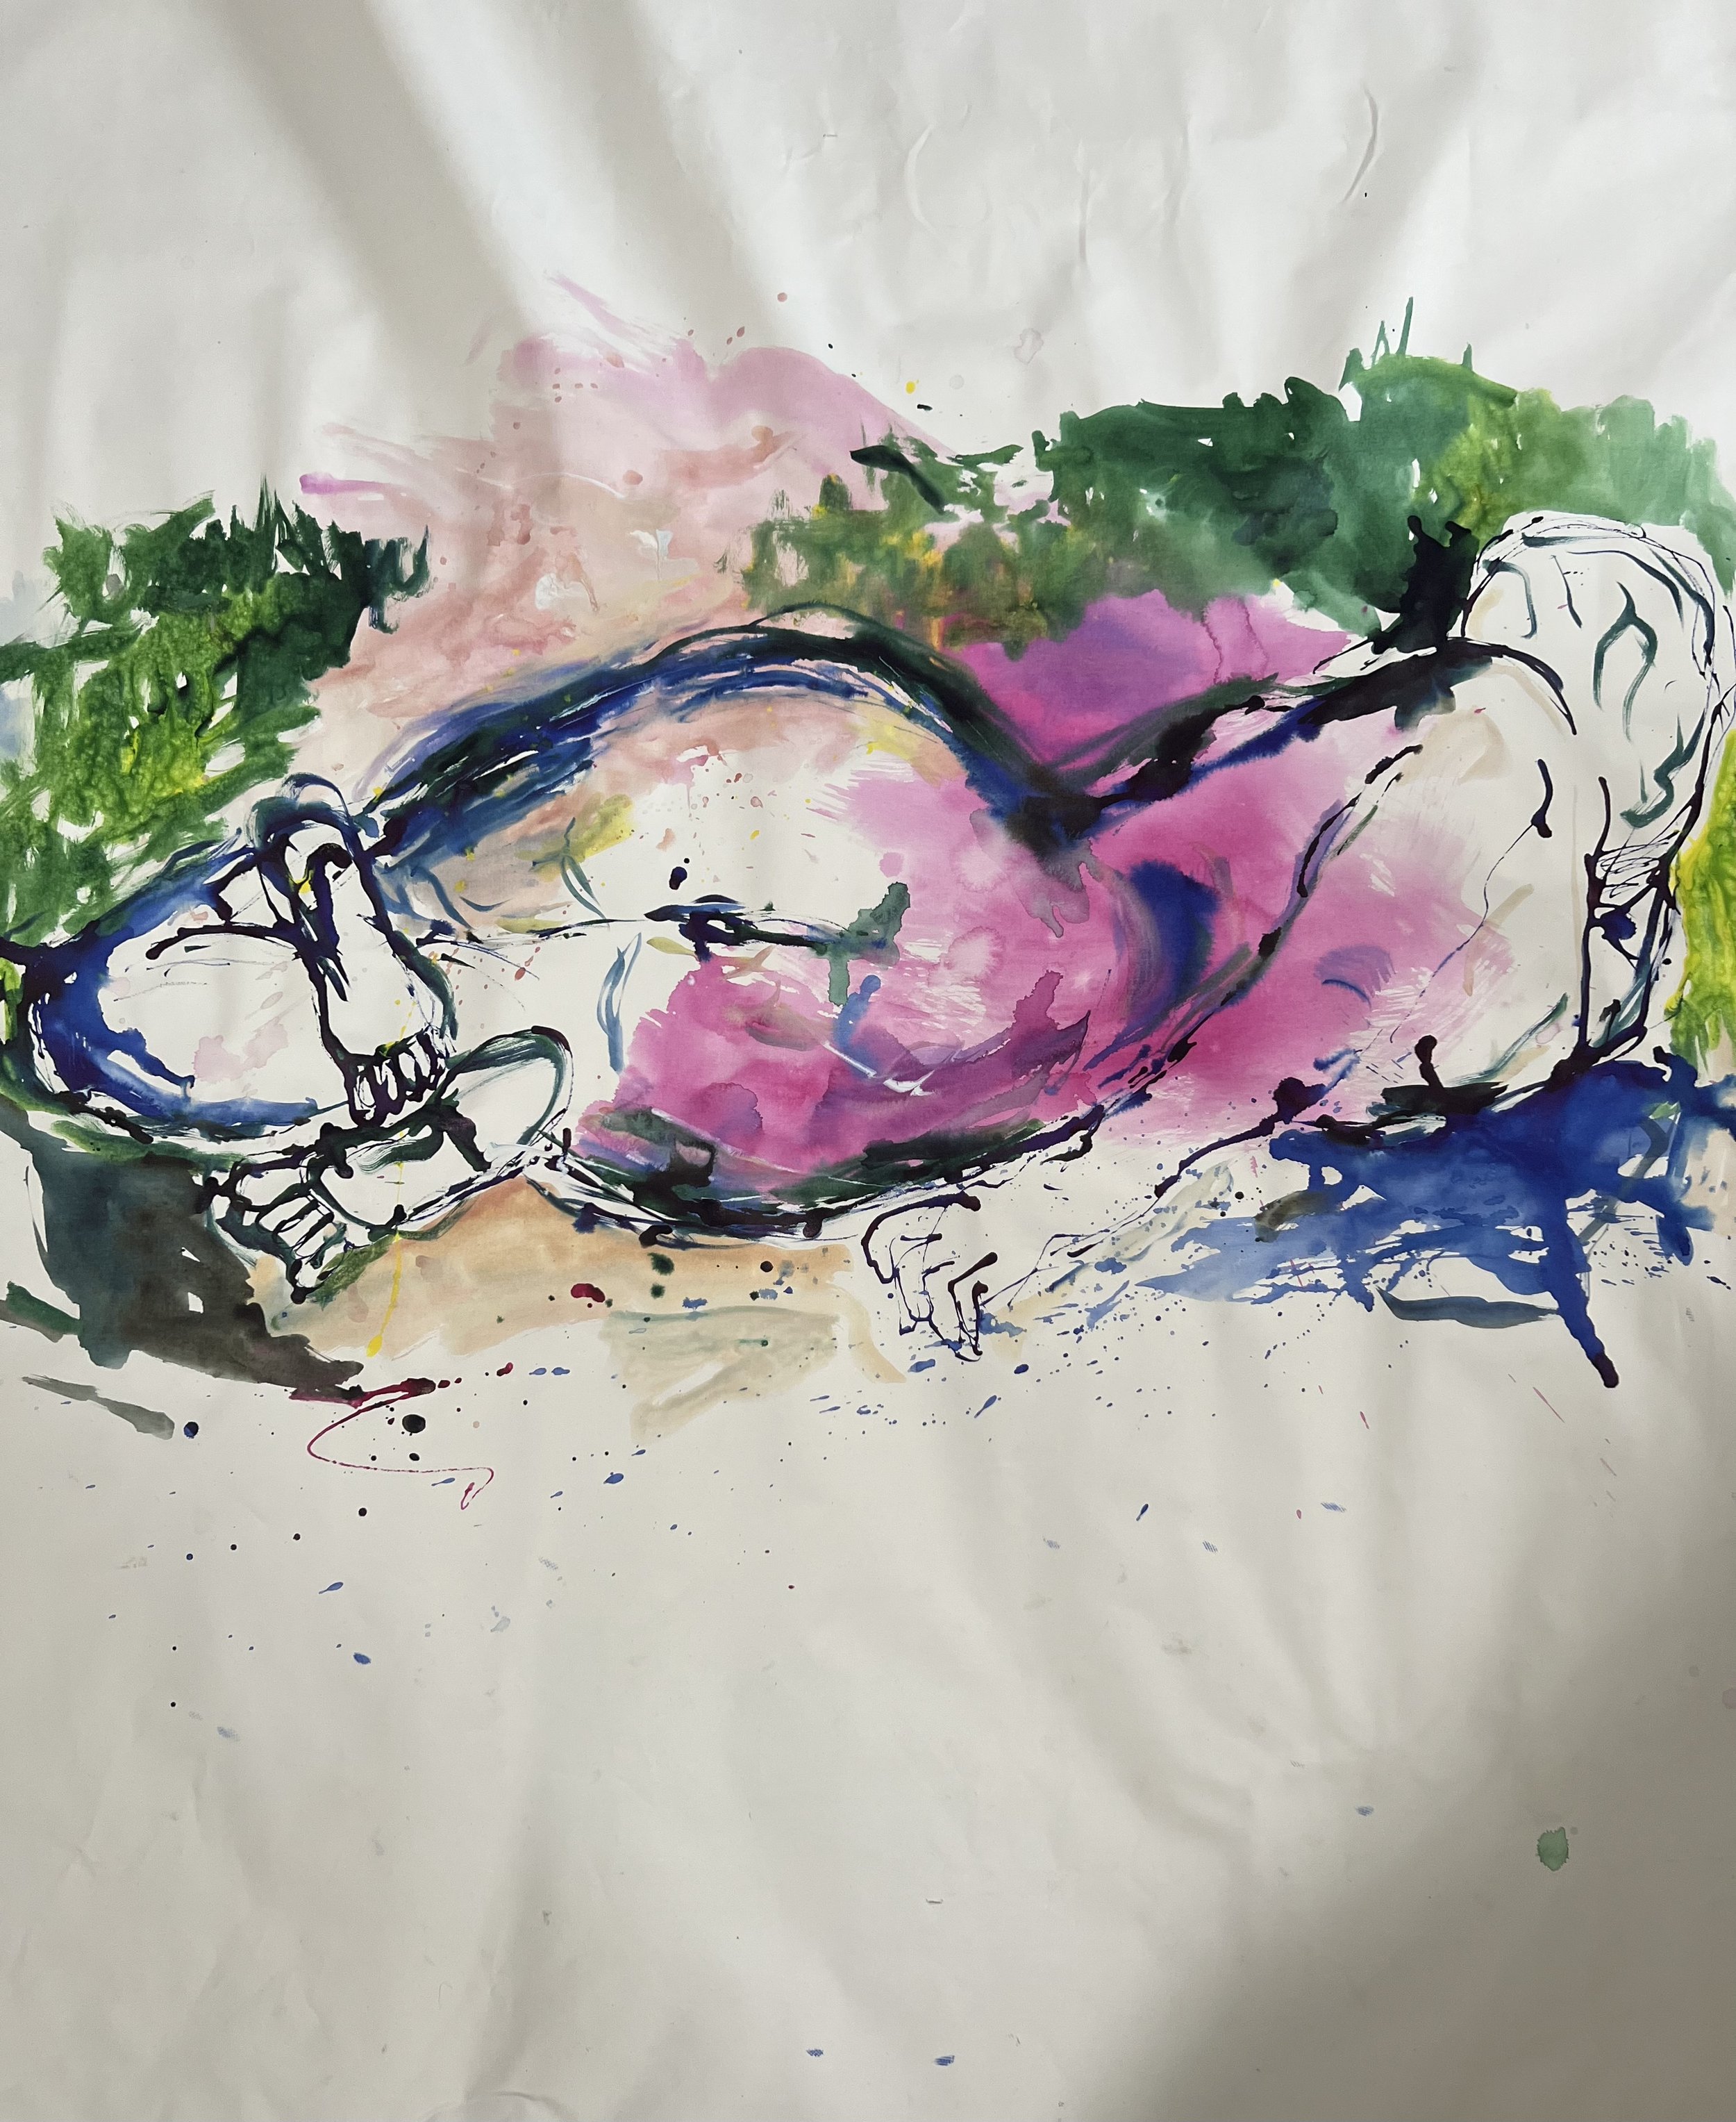 Reclining figure, 2021, watercolour on canvas, 160 x 120 cm